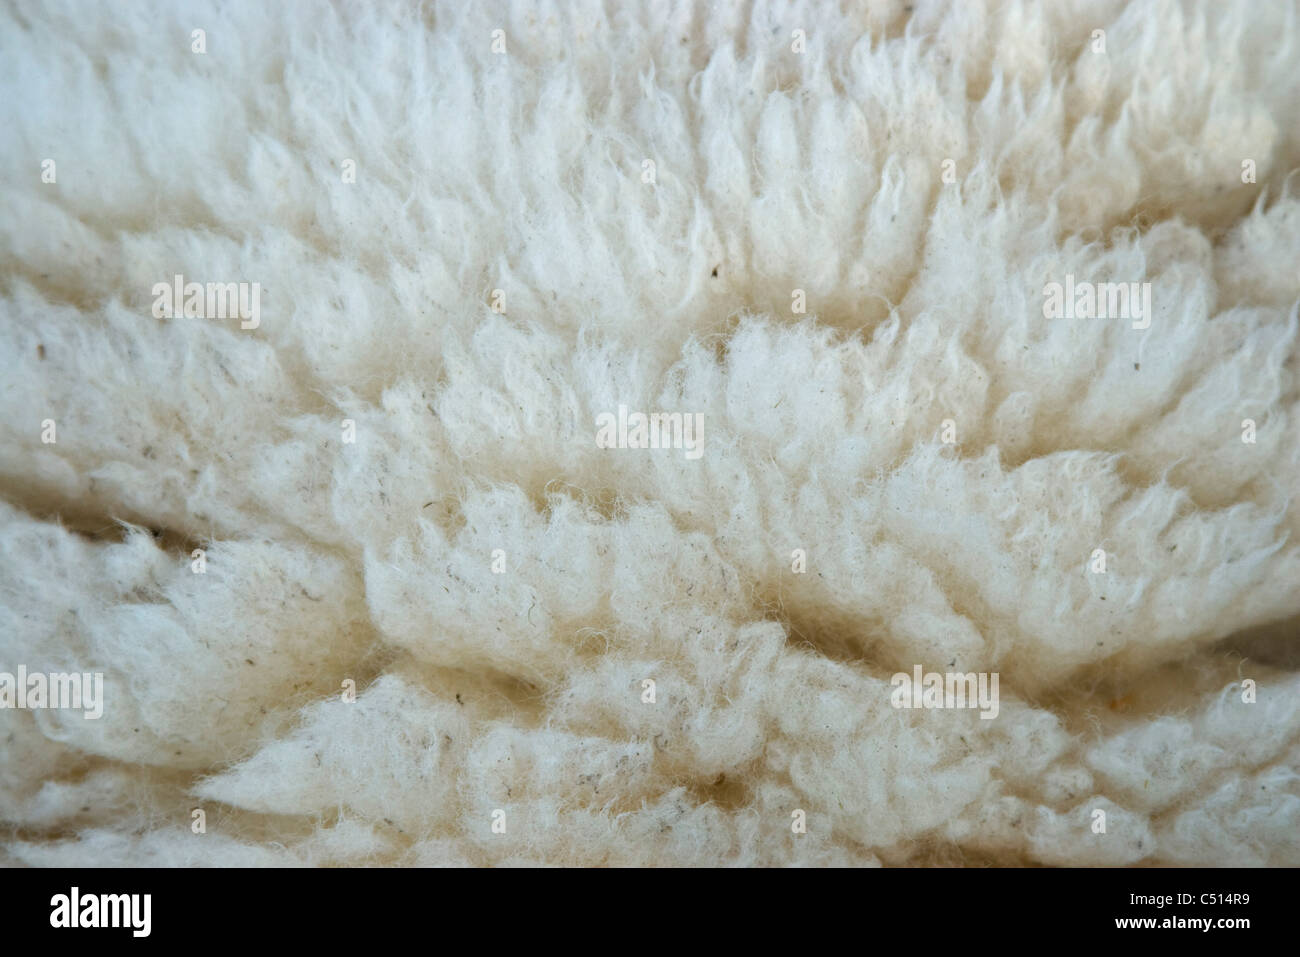 Sheep's wool, close-up Stock Photo